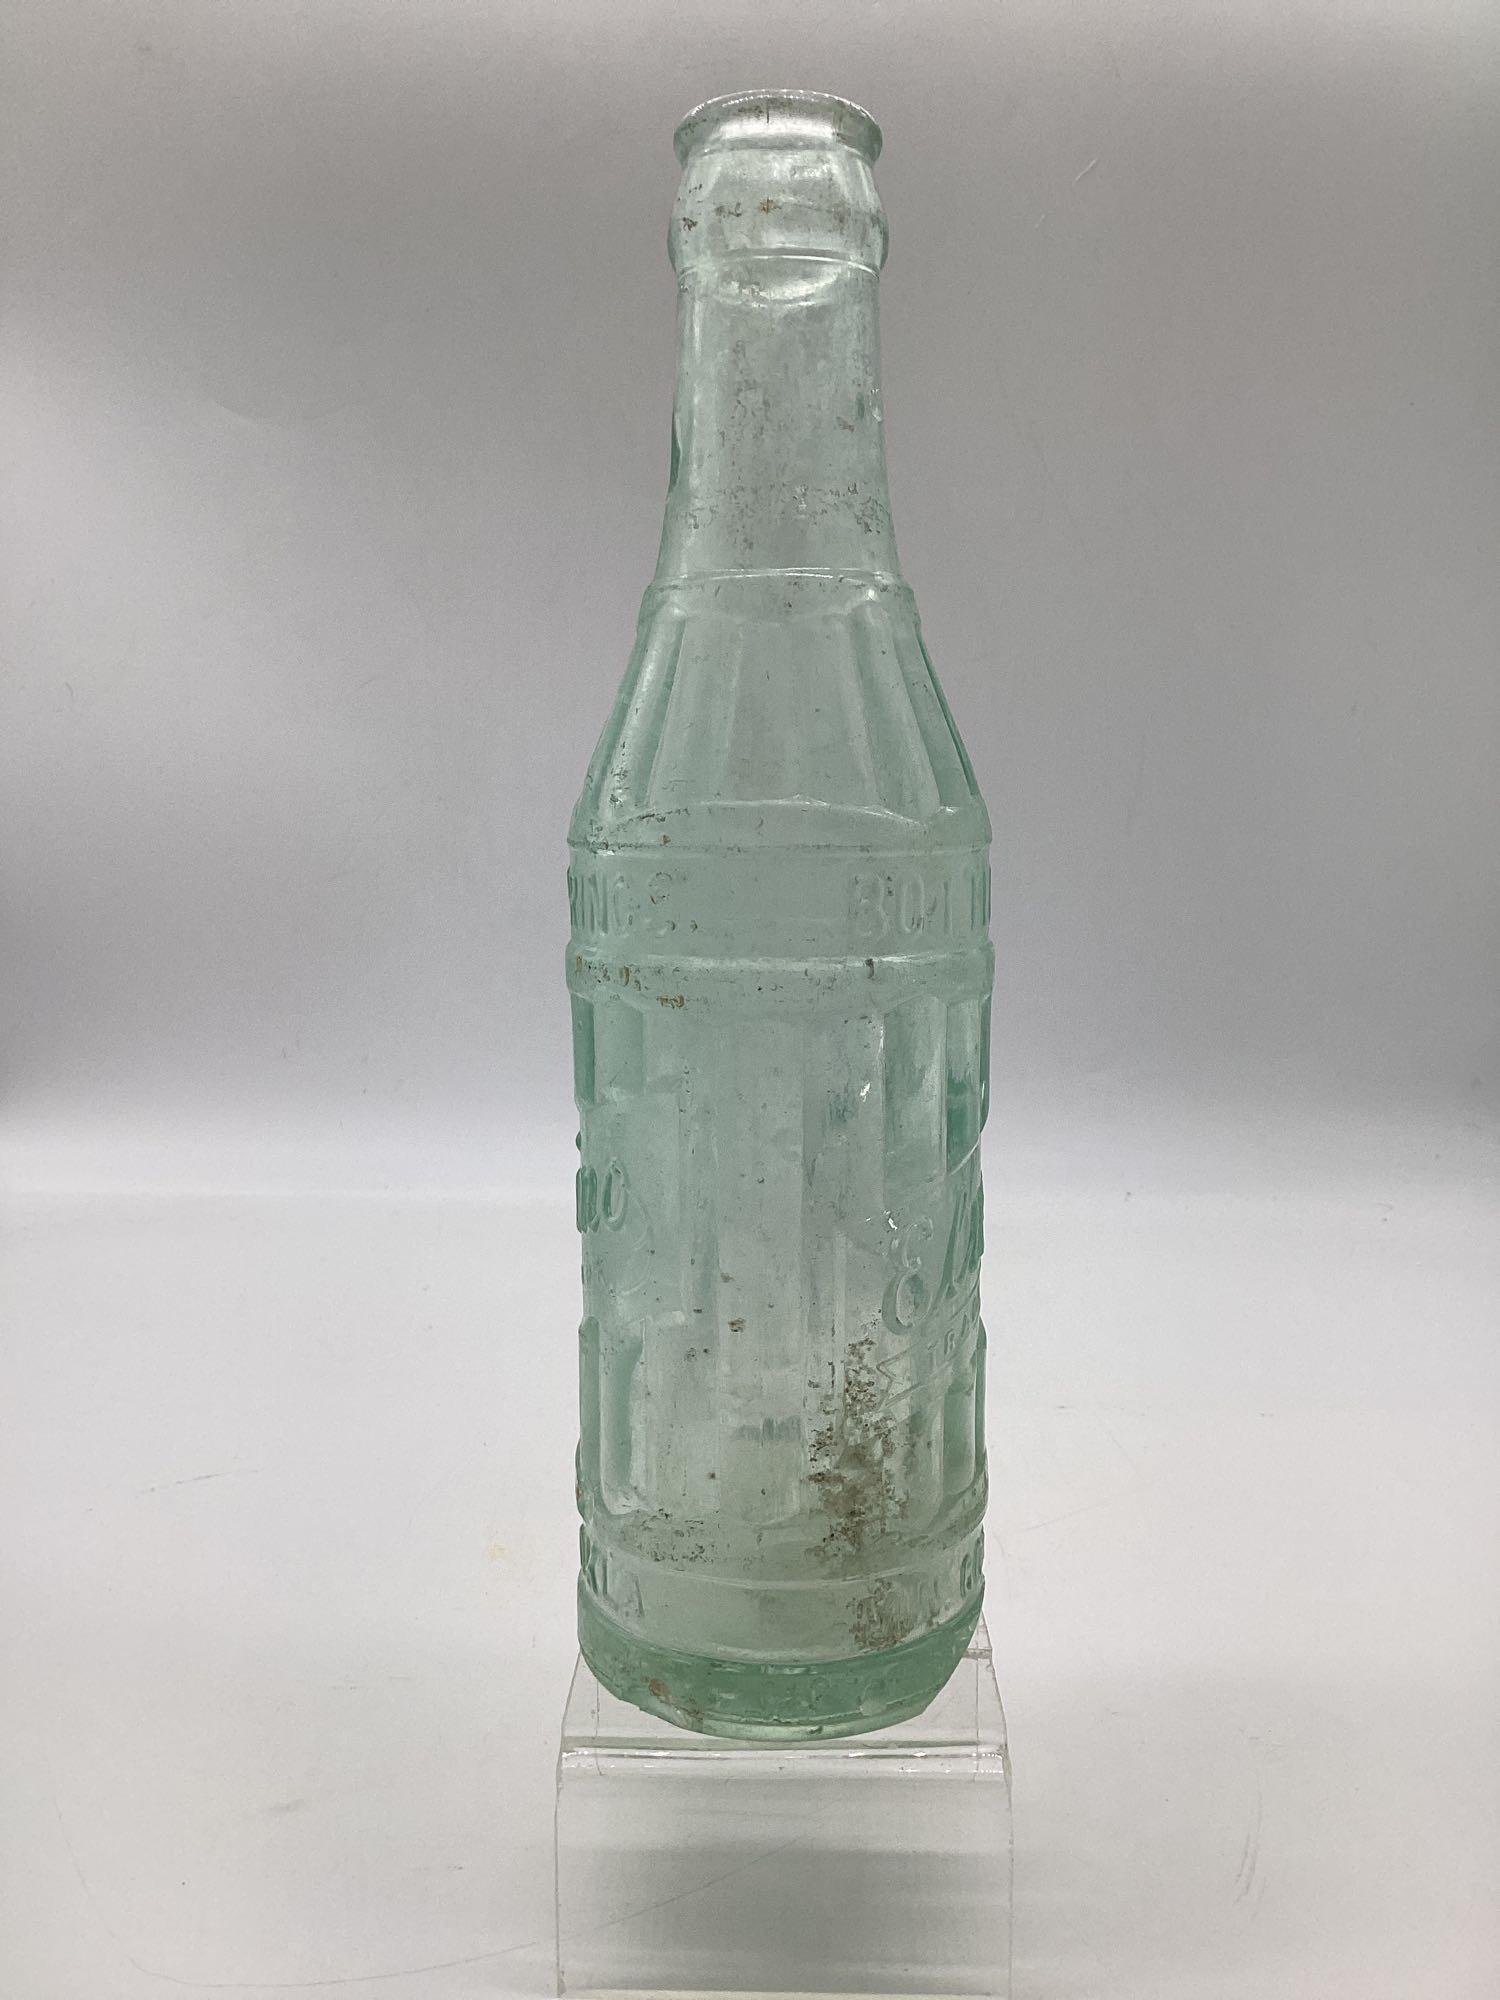 Elwino Soda Bottle Sand Springs/ Tulsa, Oklahoma